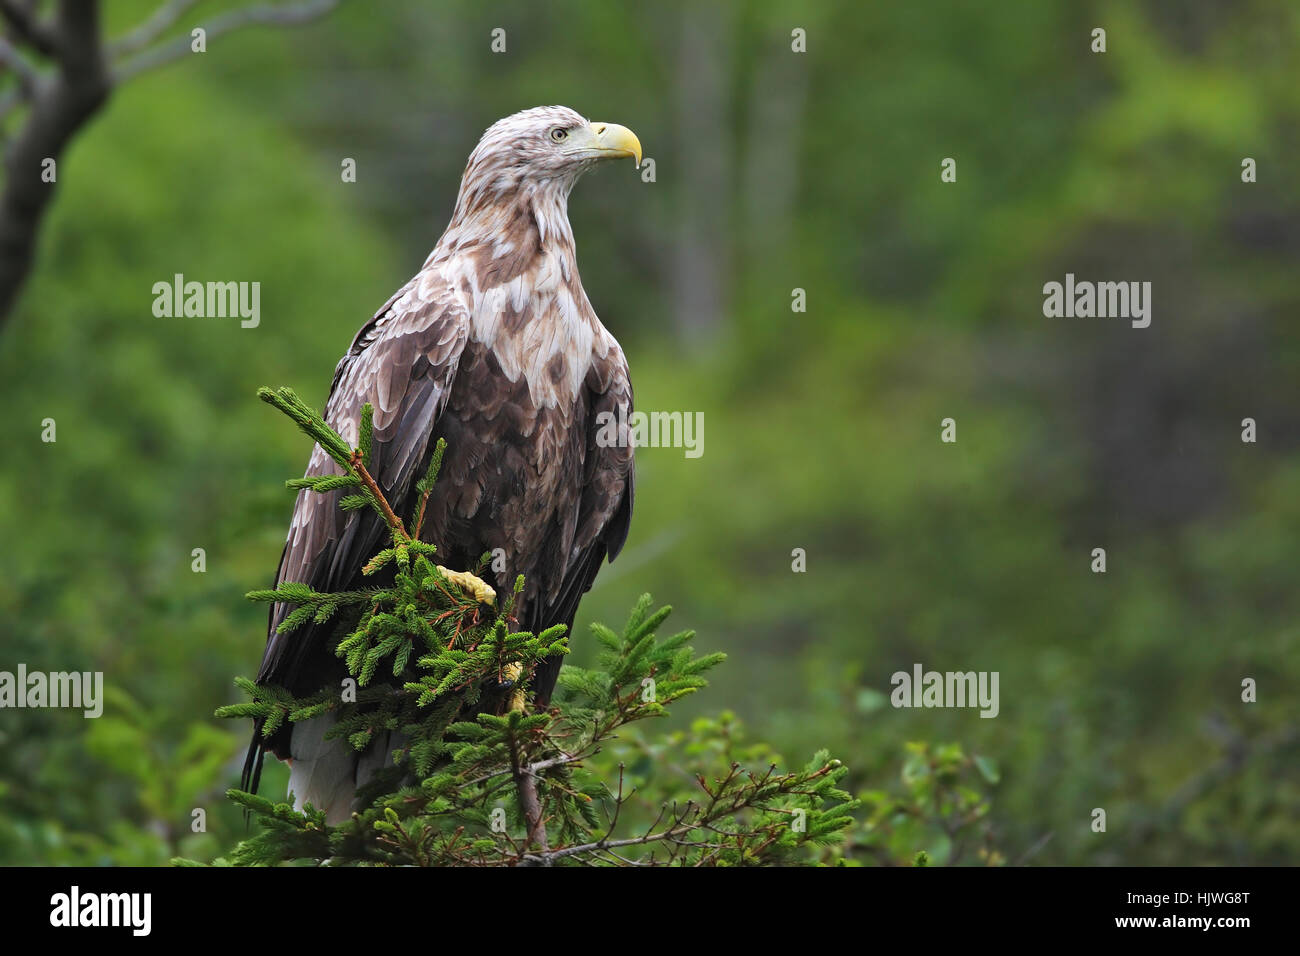 White-tailed eagle (haliaetus albicilla) on spruce, Norwegian coast, Flatanger, Norway Stock Photo